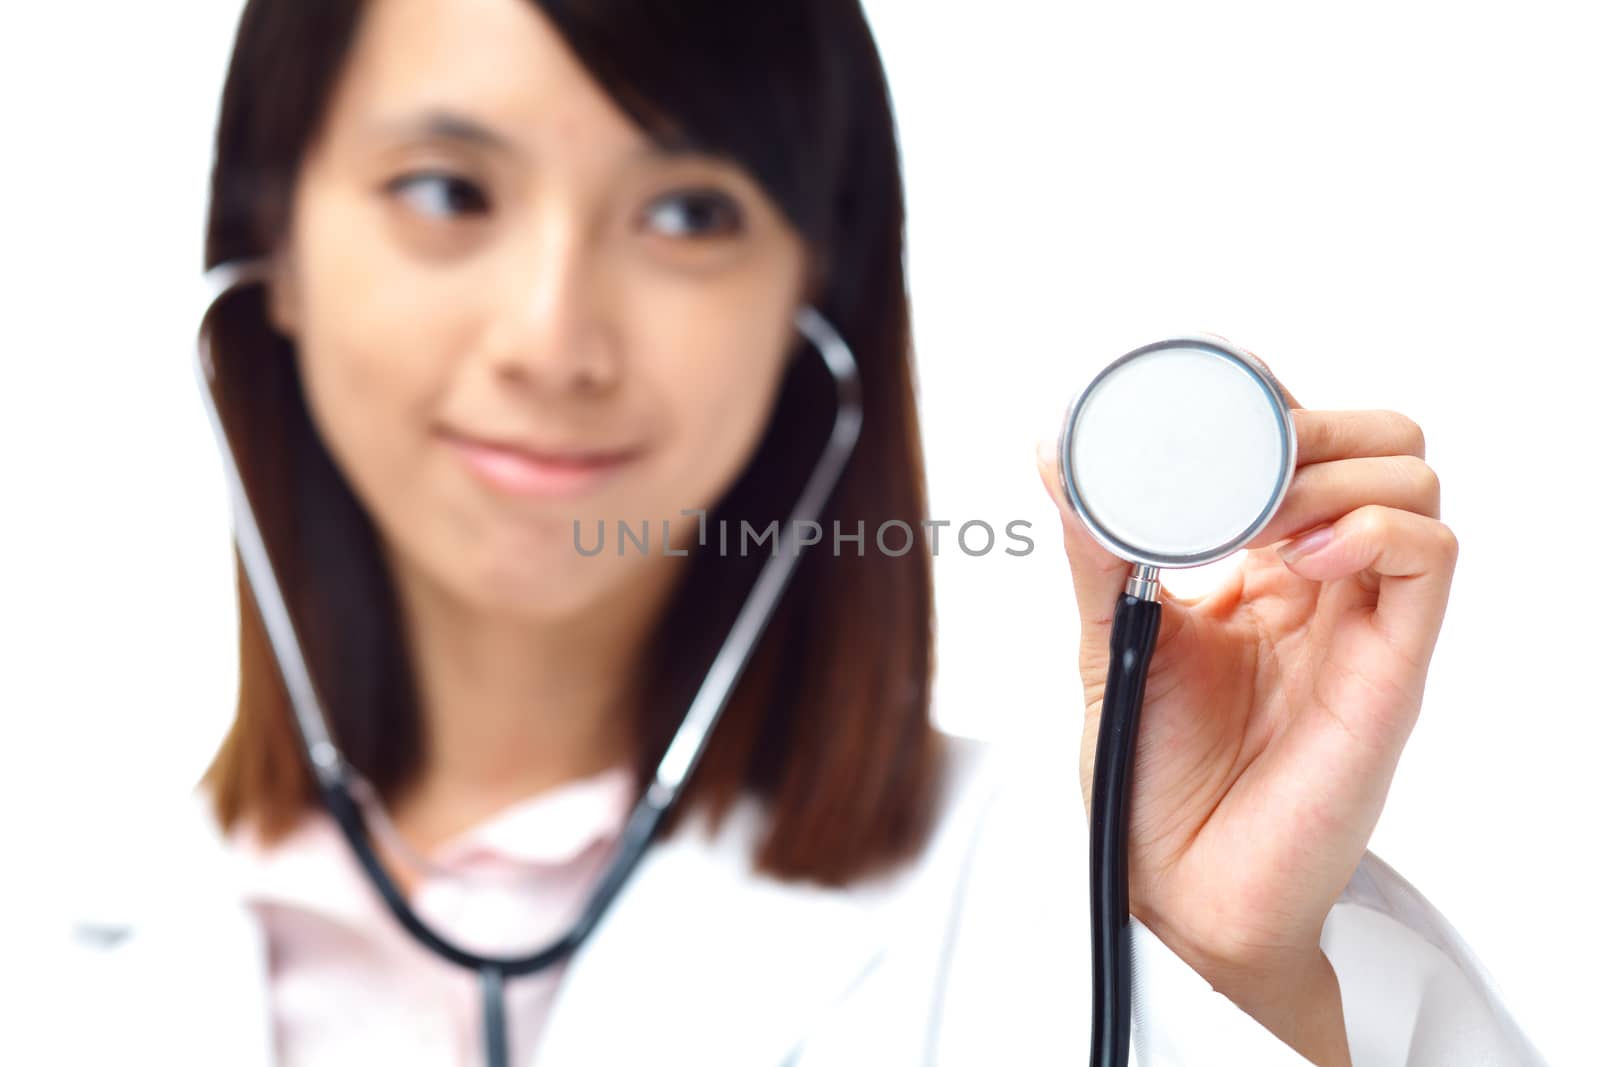 Asian female doctor holding stethoscope